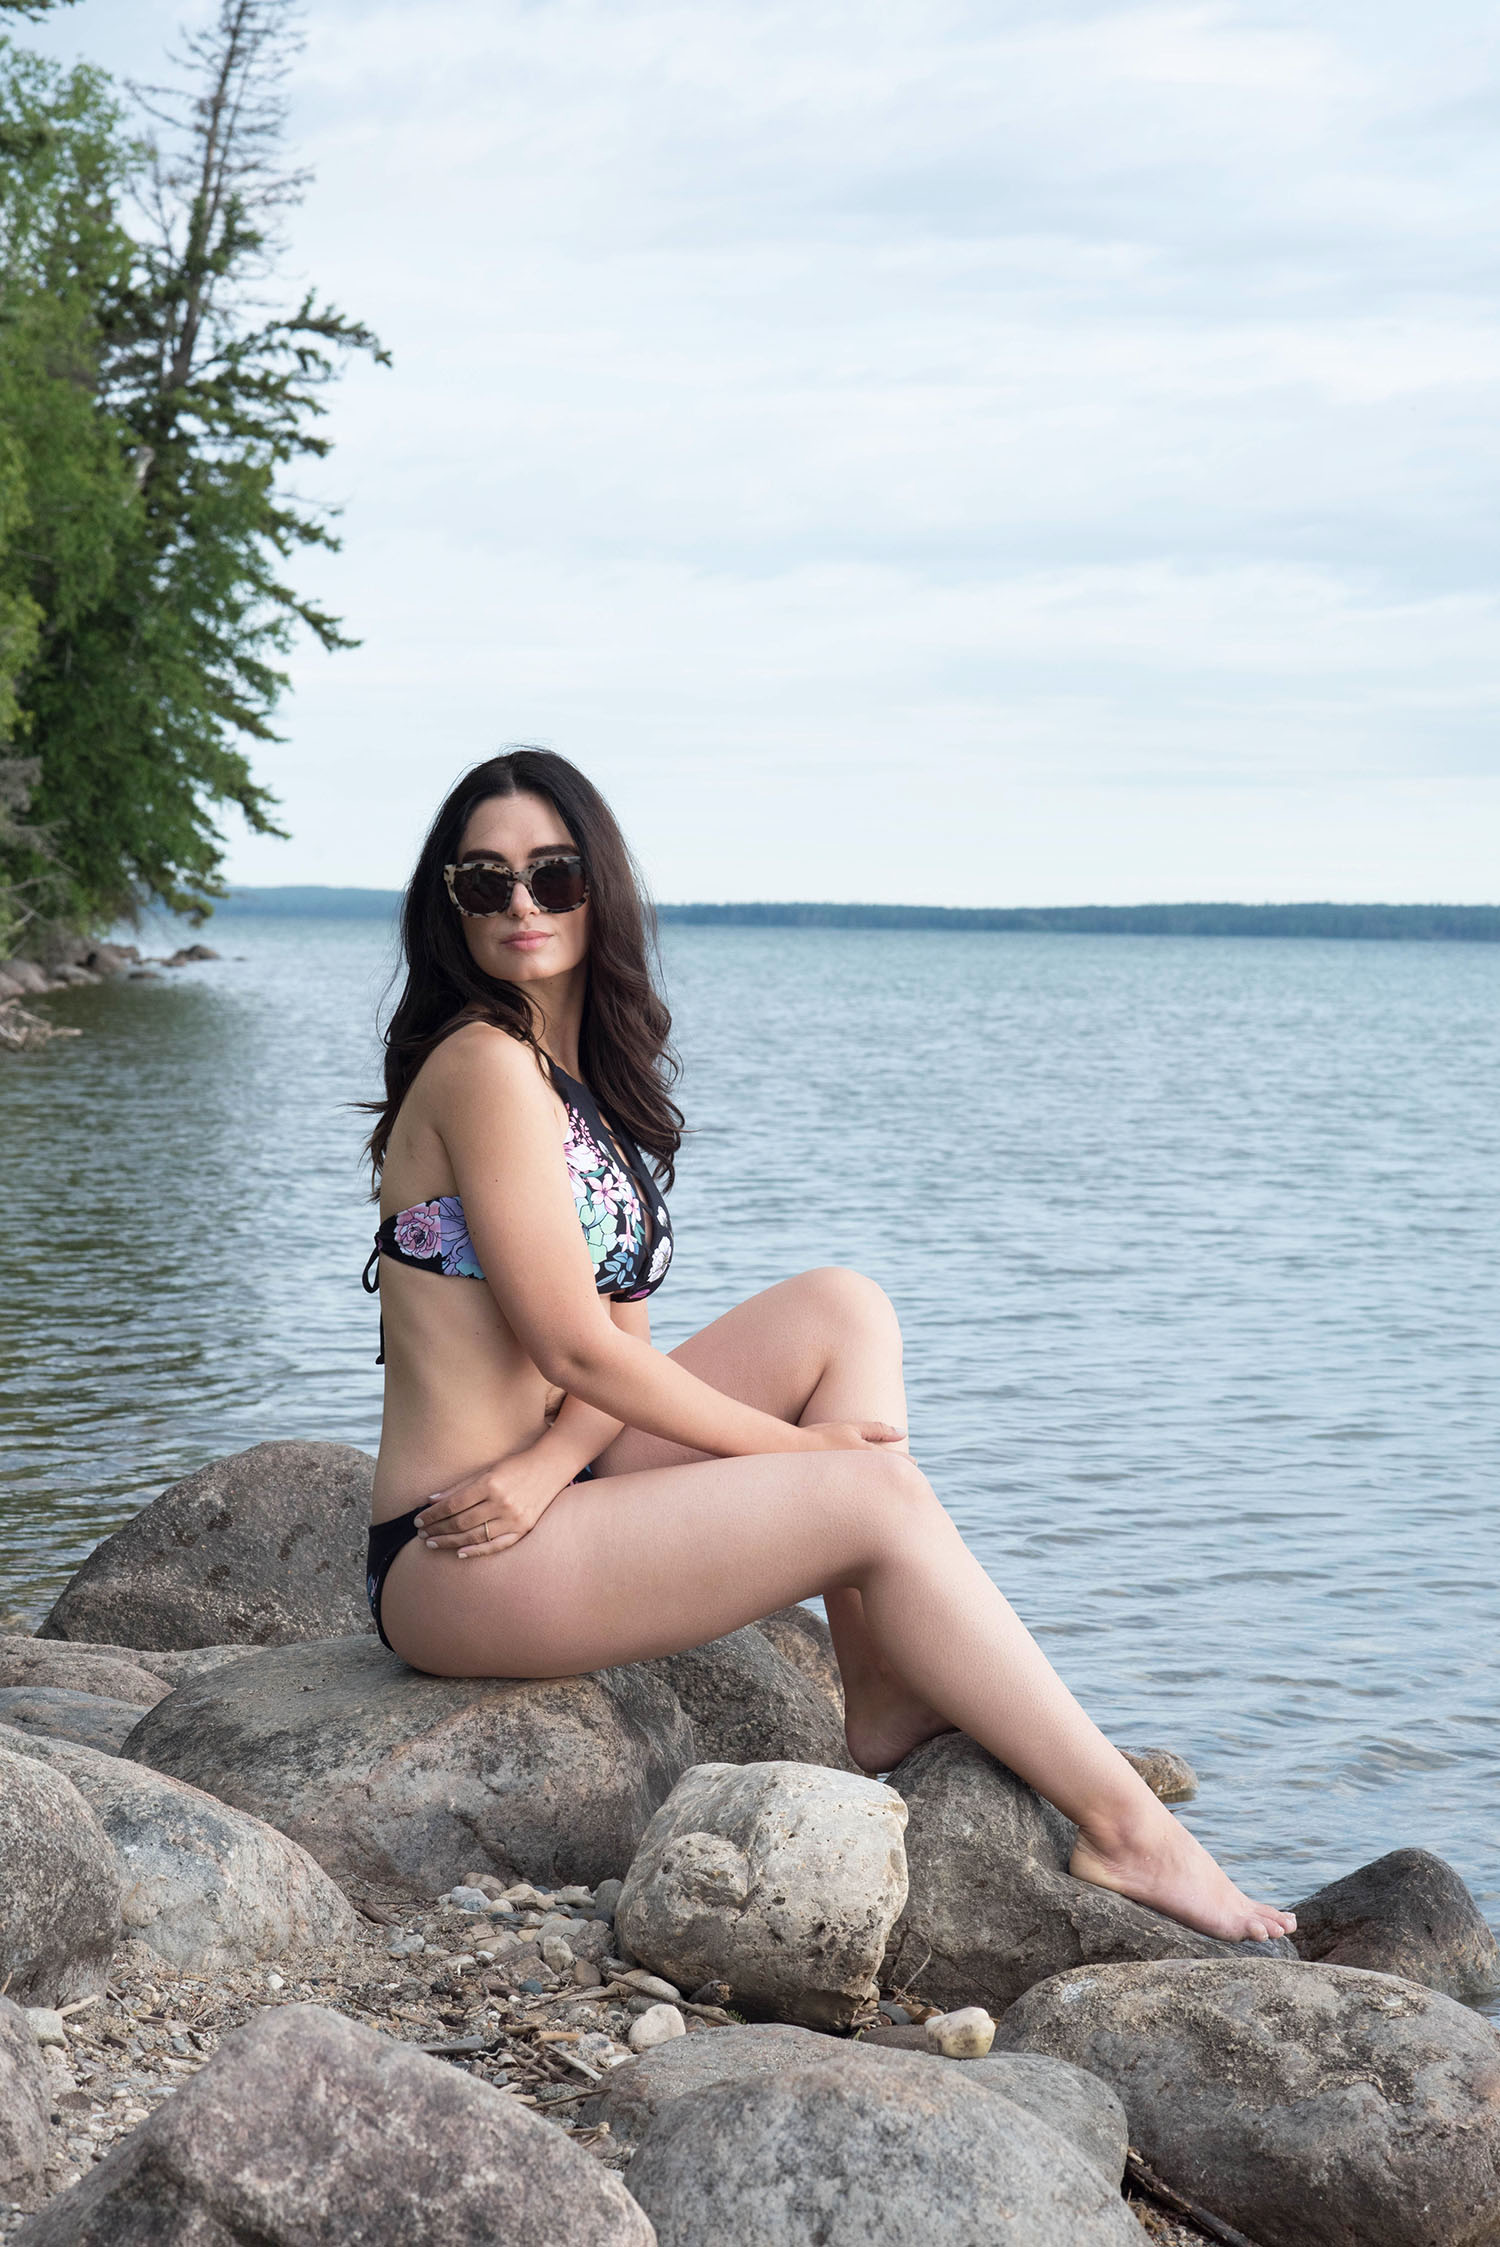 Canadian fashion blogger Cee Fardoe of Coco & Vera sits on a rocky beach wearing a floral O'Neill bikini